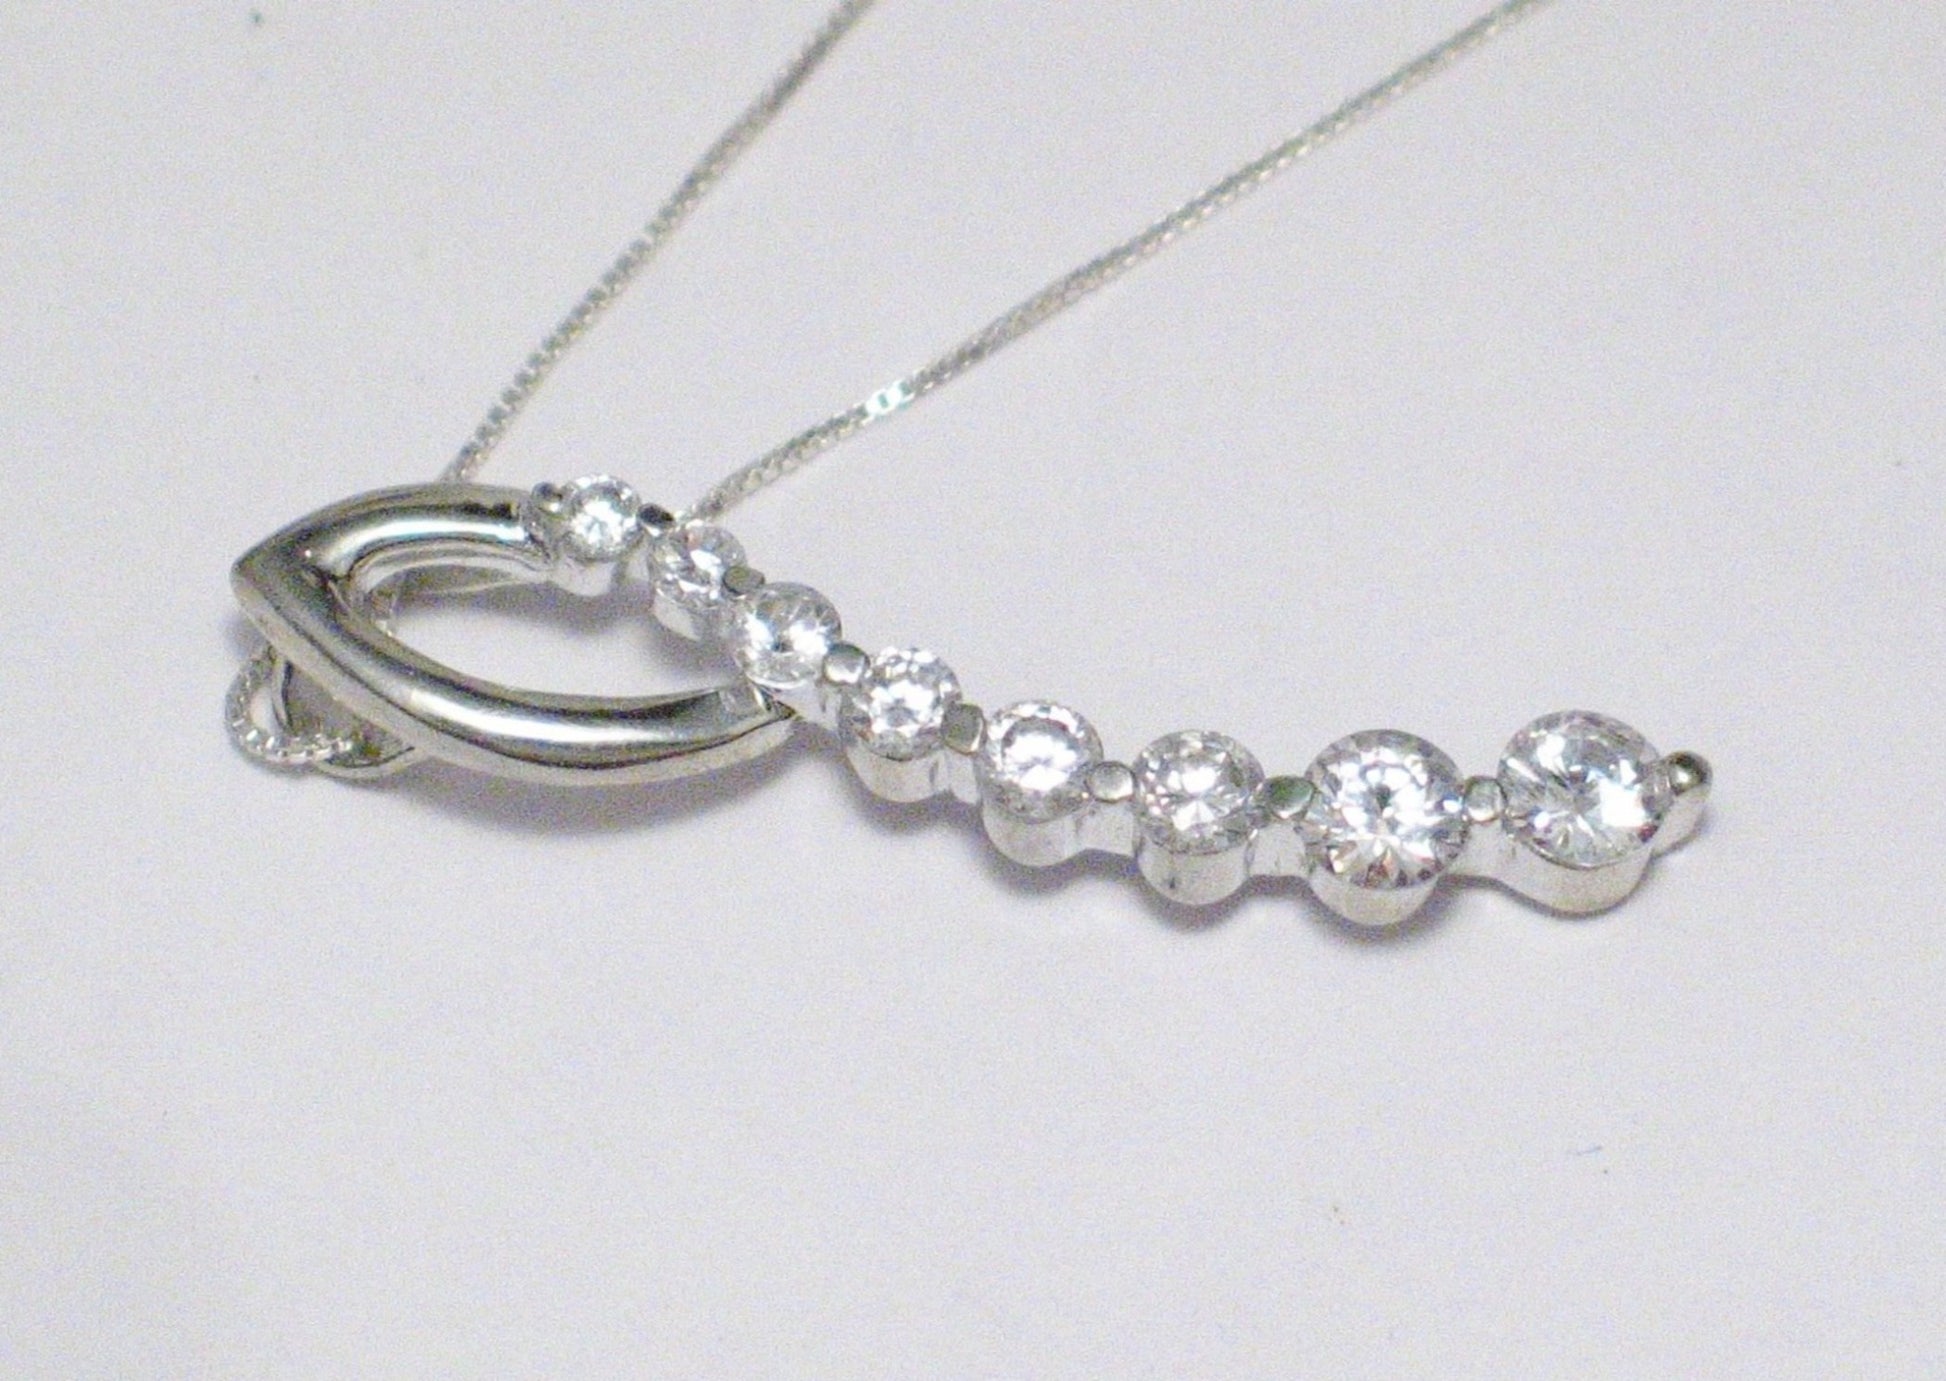 Journey Necklace, Fancy Wavy Bar Style Cubic Zirconia Gemstone Pendant Chain Necklace - Blingschlingers Jewelry